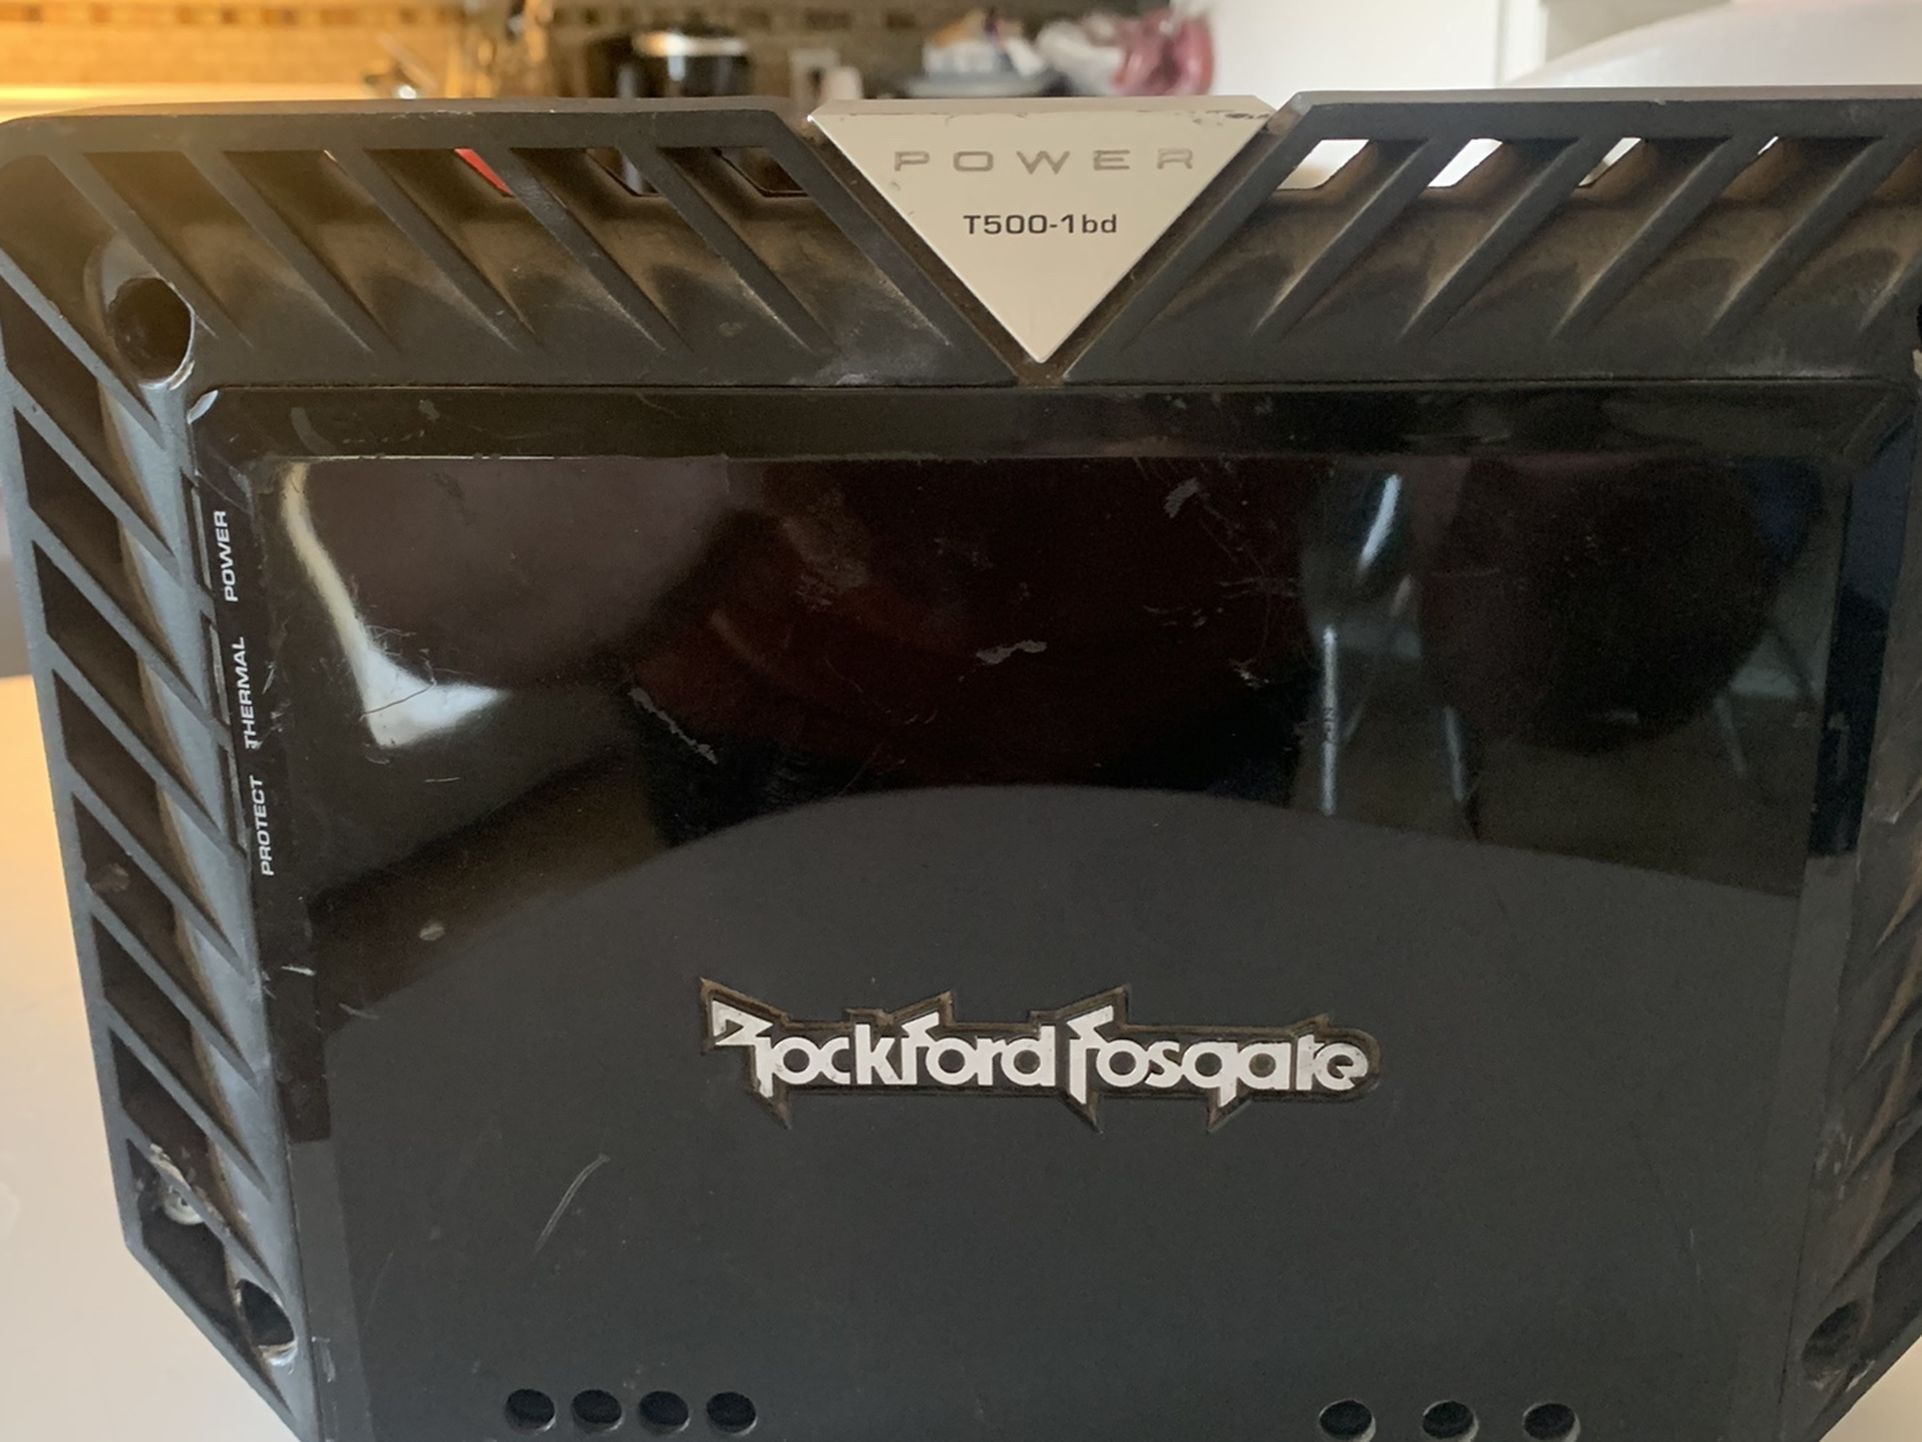 Rockford Fosgate T500-1bd Amp